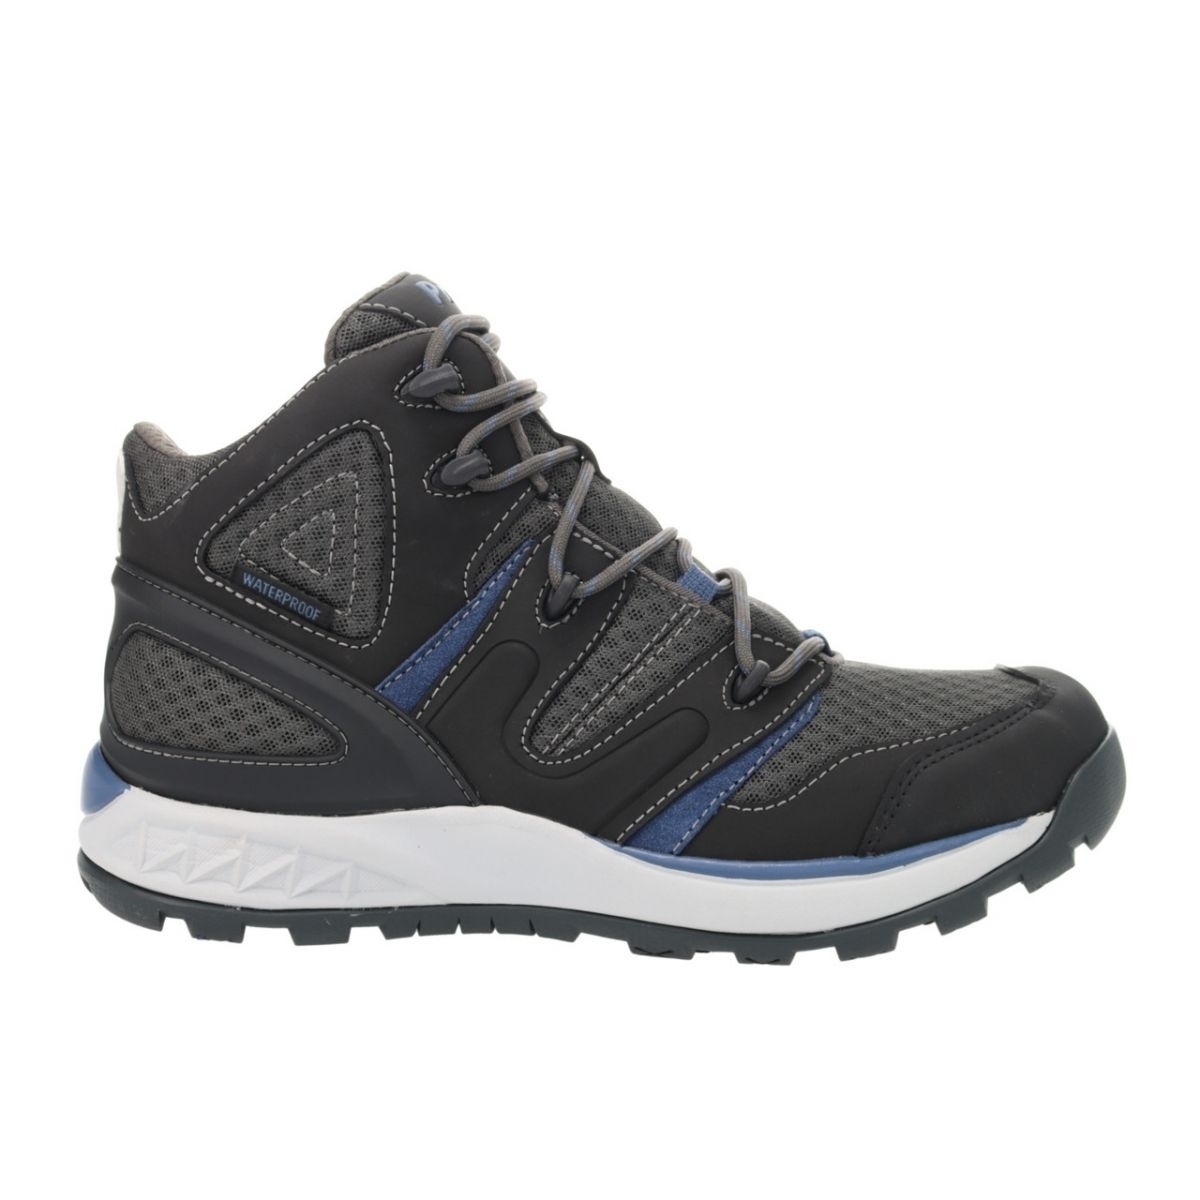 Propet Men's Veymont Waterproof Hiking Boot Grey/Blue - MOA022SGRB GREY/BLUE - GREY/BLUE, 12 XX-Wide